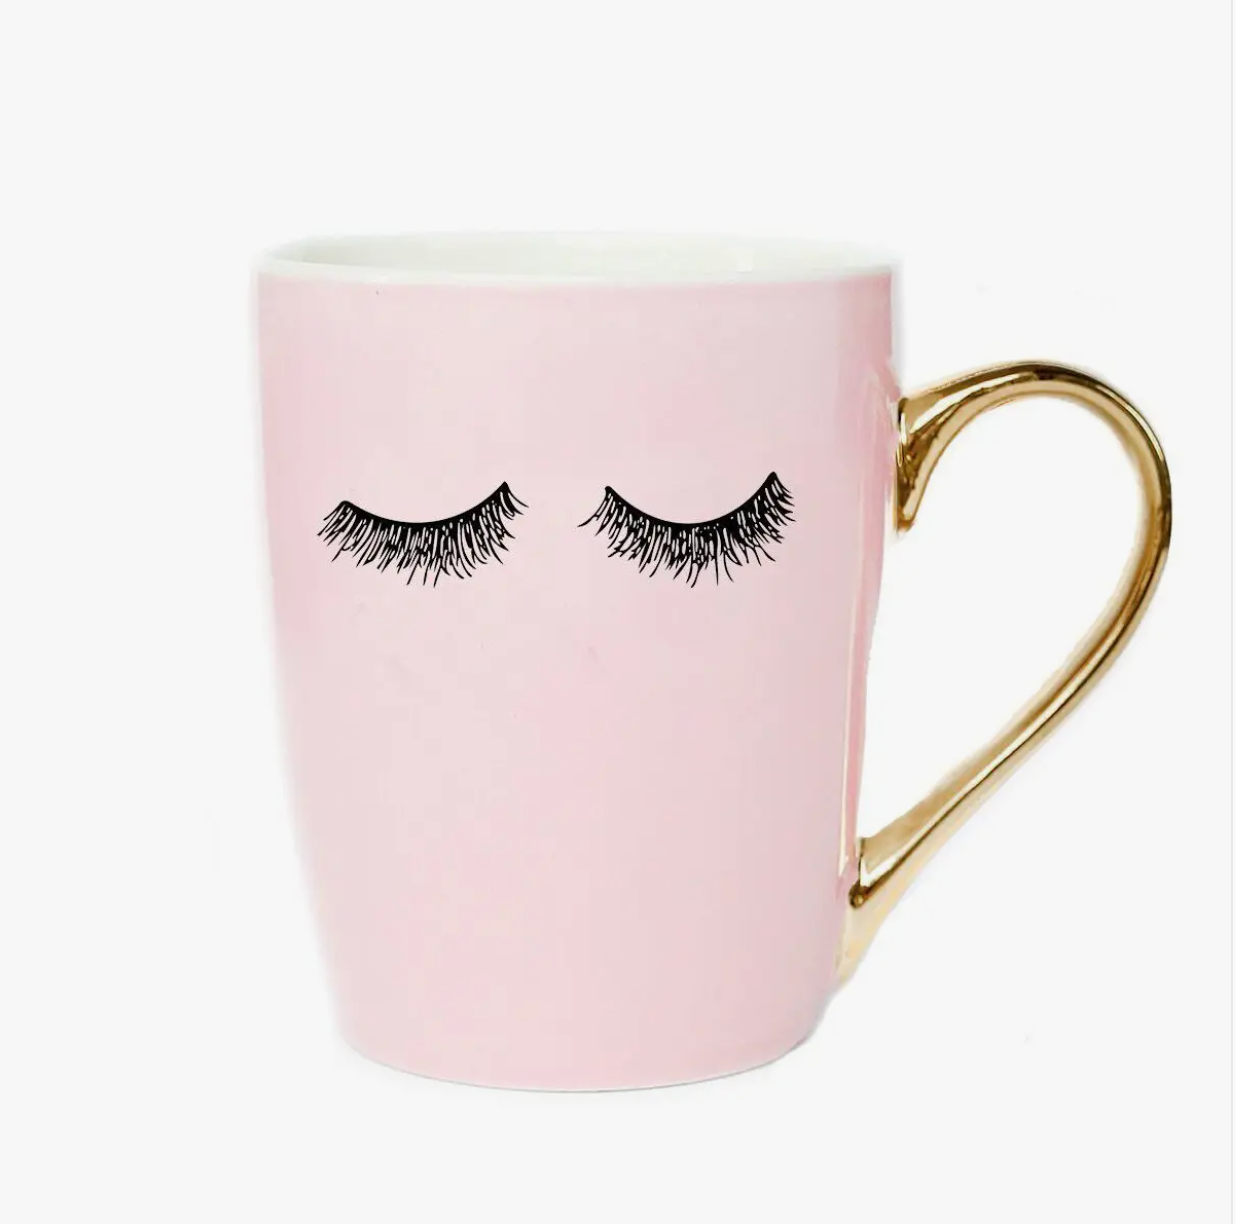 "Eyelashes" Pink & Gold Coffee Mug by Sweet Water Decor